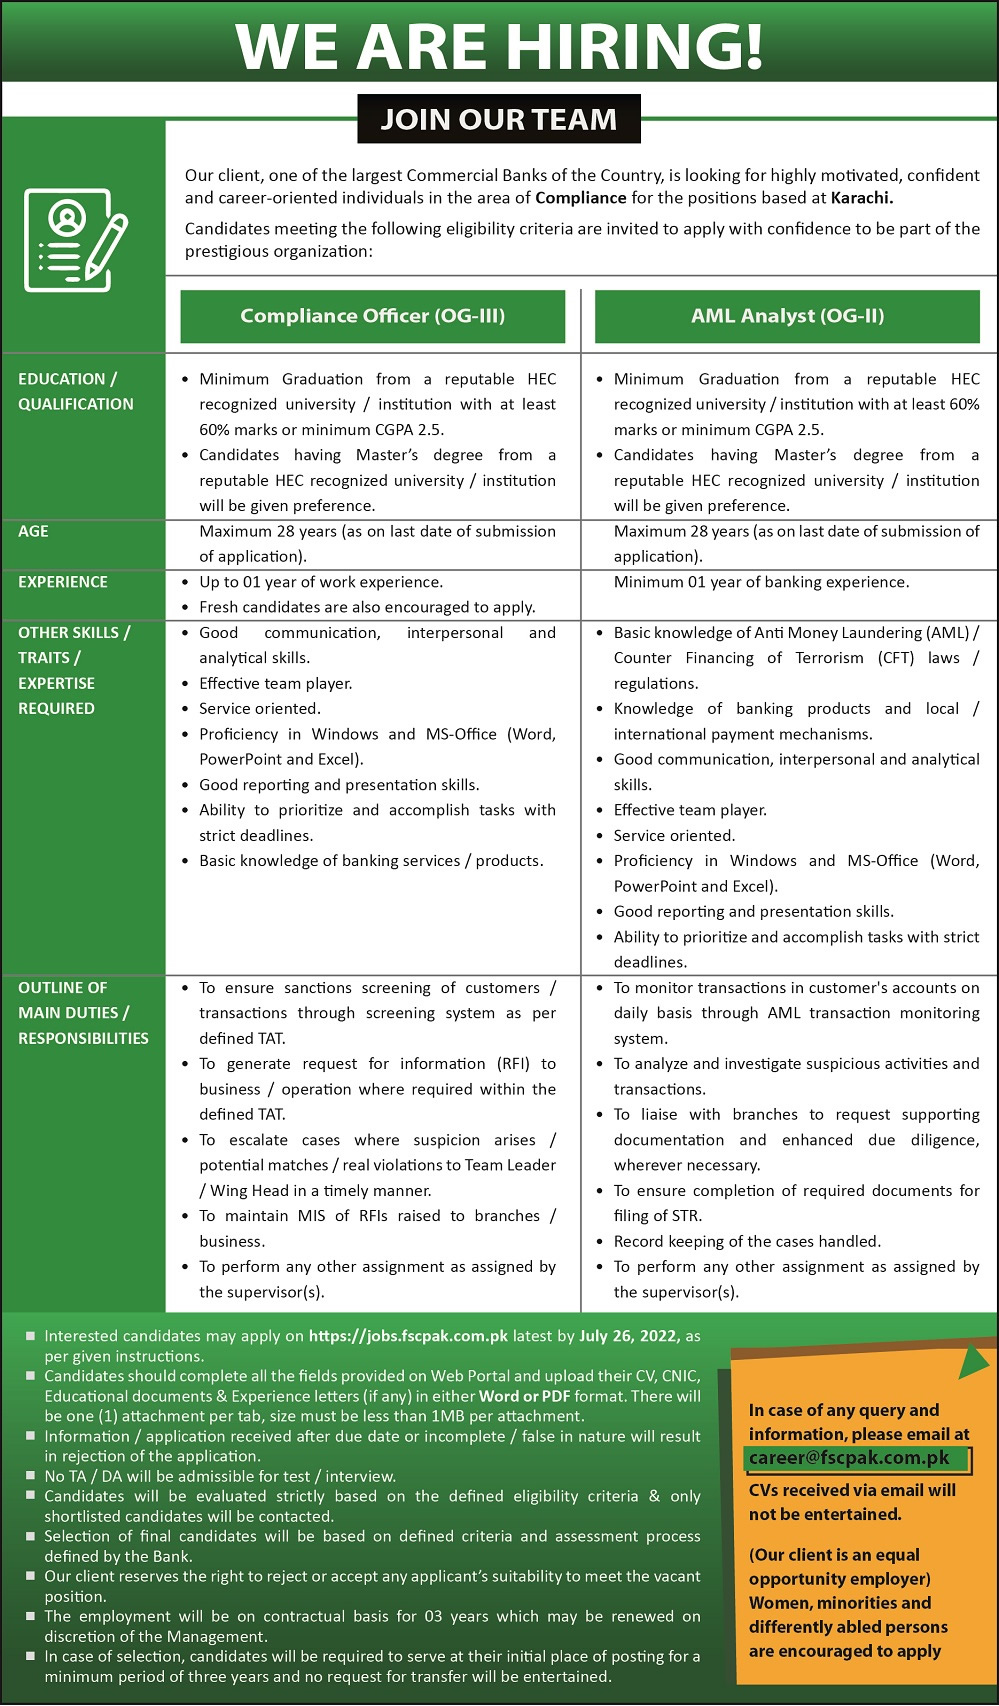 National Bank of Pakistan Jobs 2022 Compliance Officers, AML Analyst OG III Apply Online